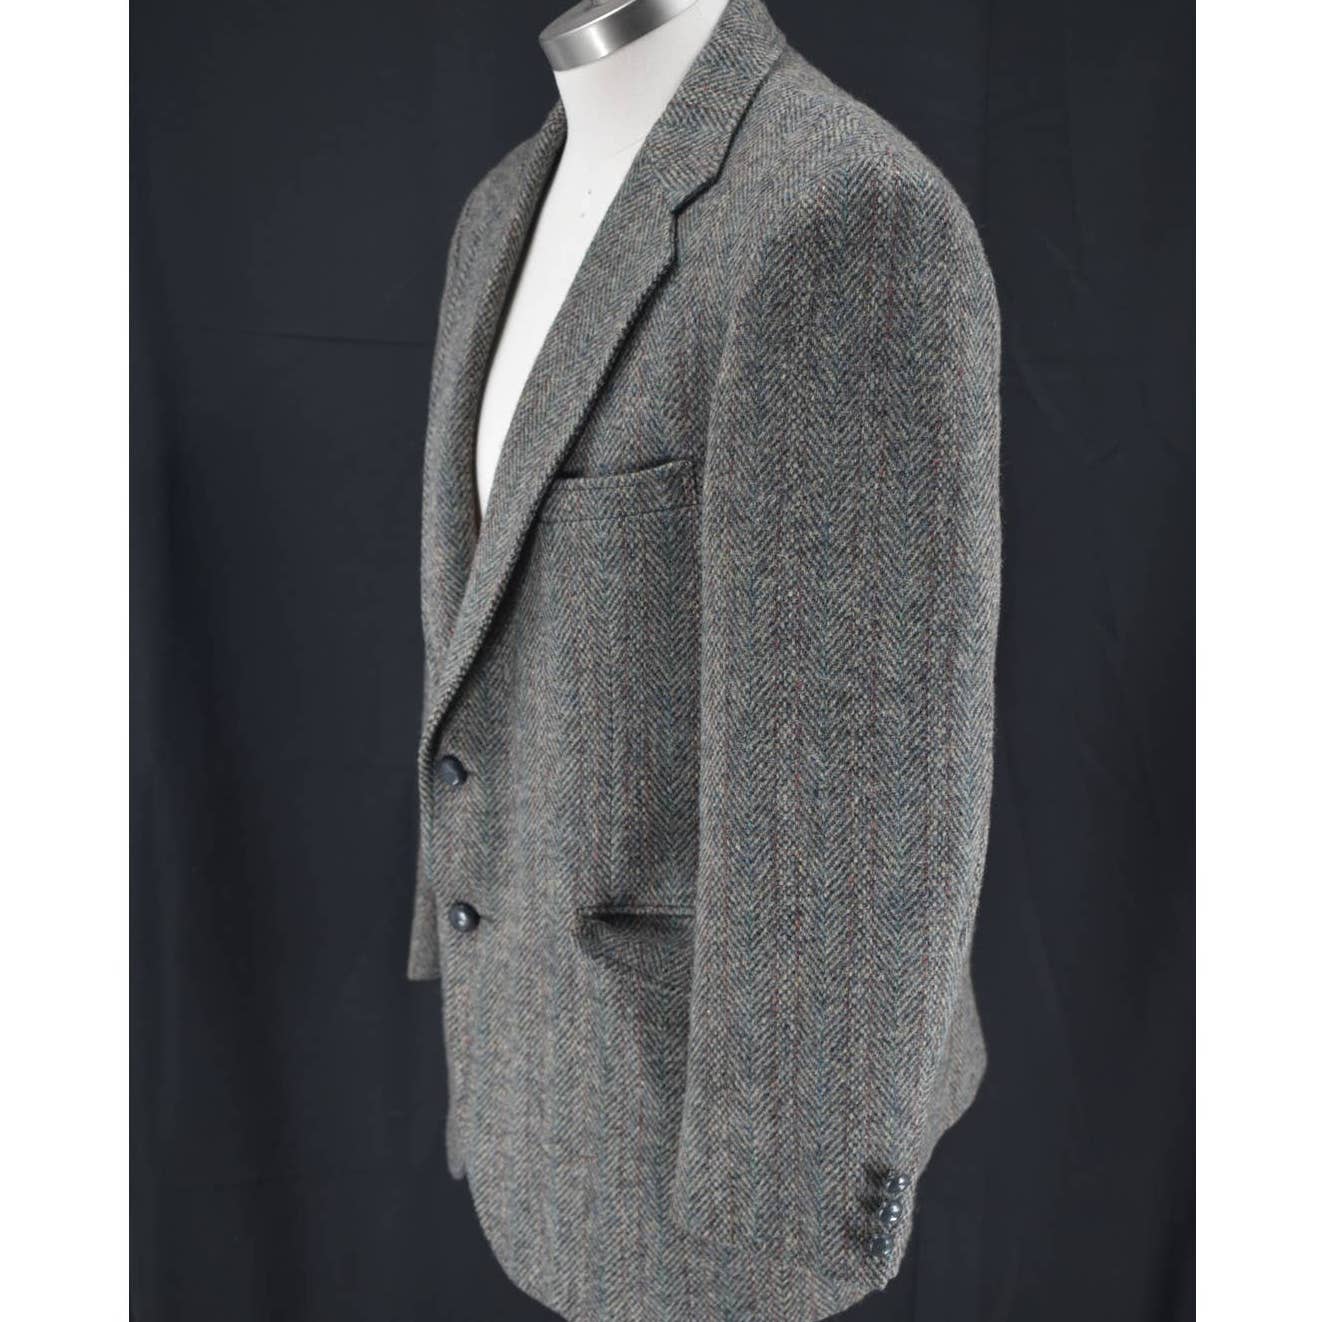 Vintage Harris Tweed 100% Pure Scottish Wool Blazer-40R